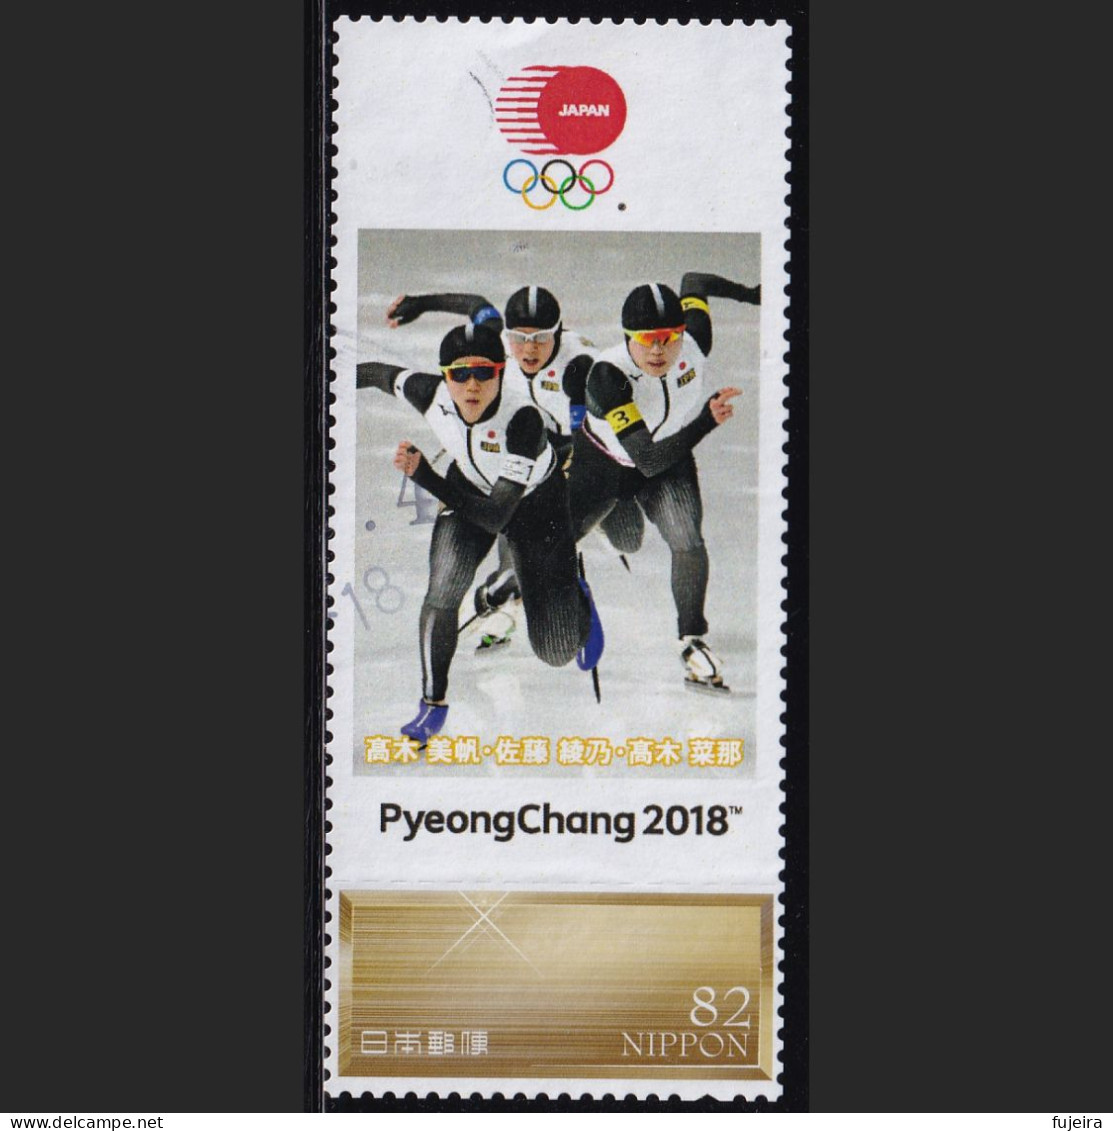 Japan Personalized Stamp, Skating/Speed Skating Miho Takagi PyeongChang 2018 Olympics (jpv9568) Used - Usati